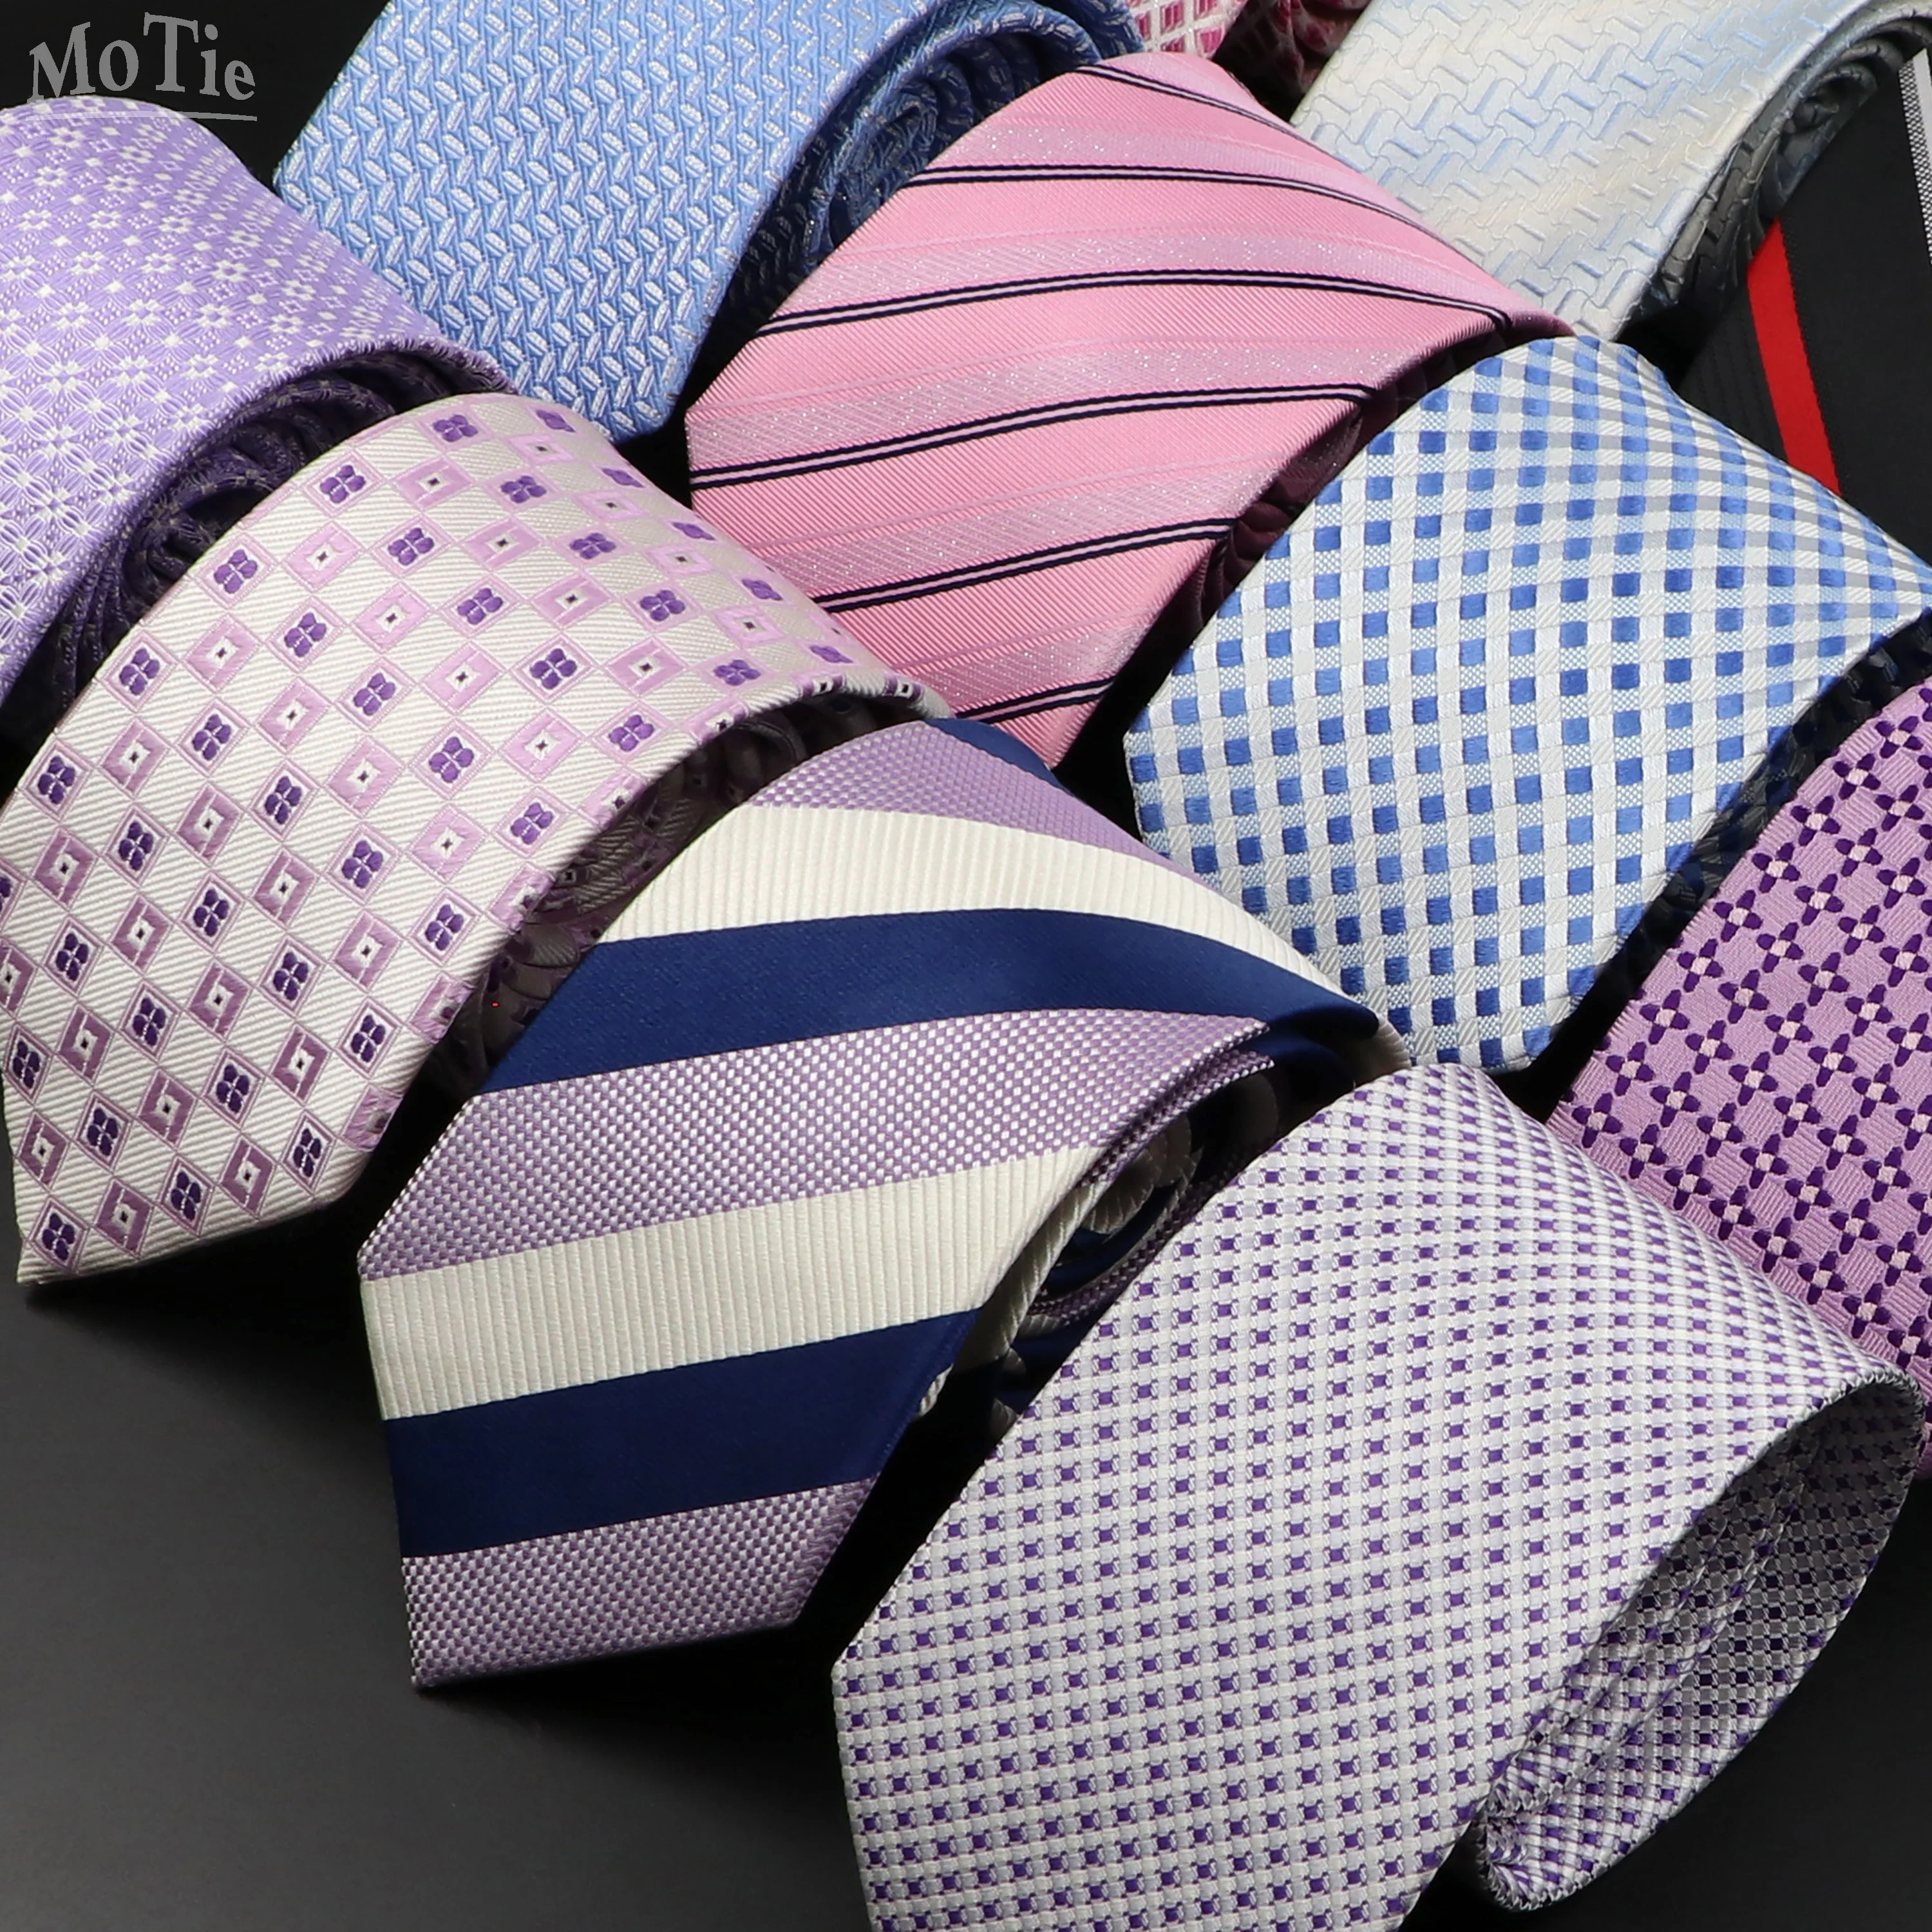 Men's 100% Silk Tie Classic Striped Plaid Necktie Jacquard Woven Ties Business Wedding Party Daily Suit Cravat Accessory Gift